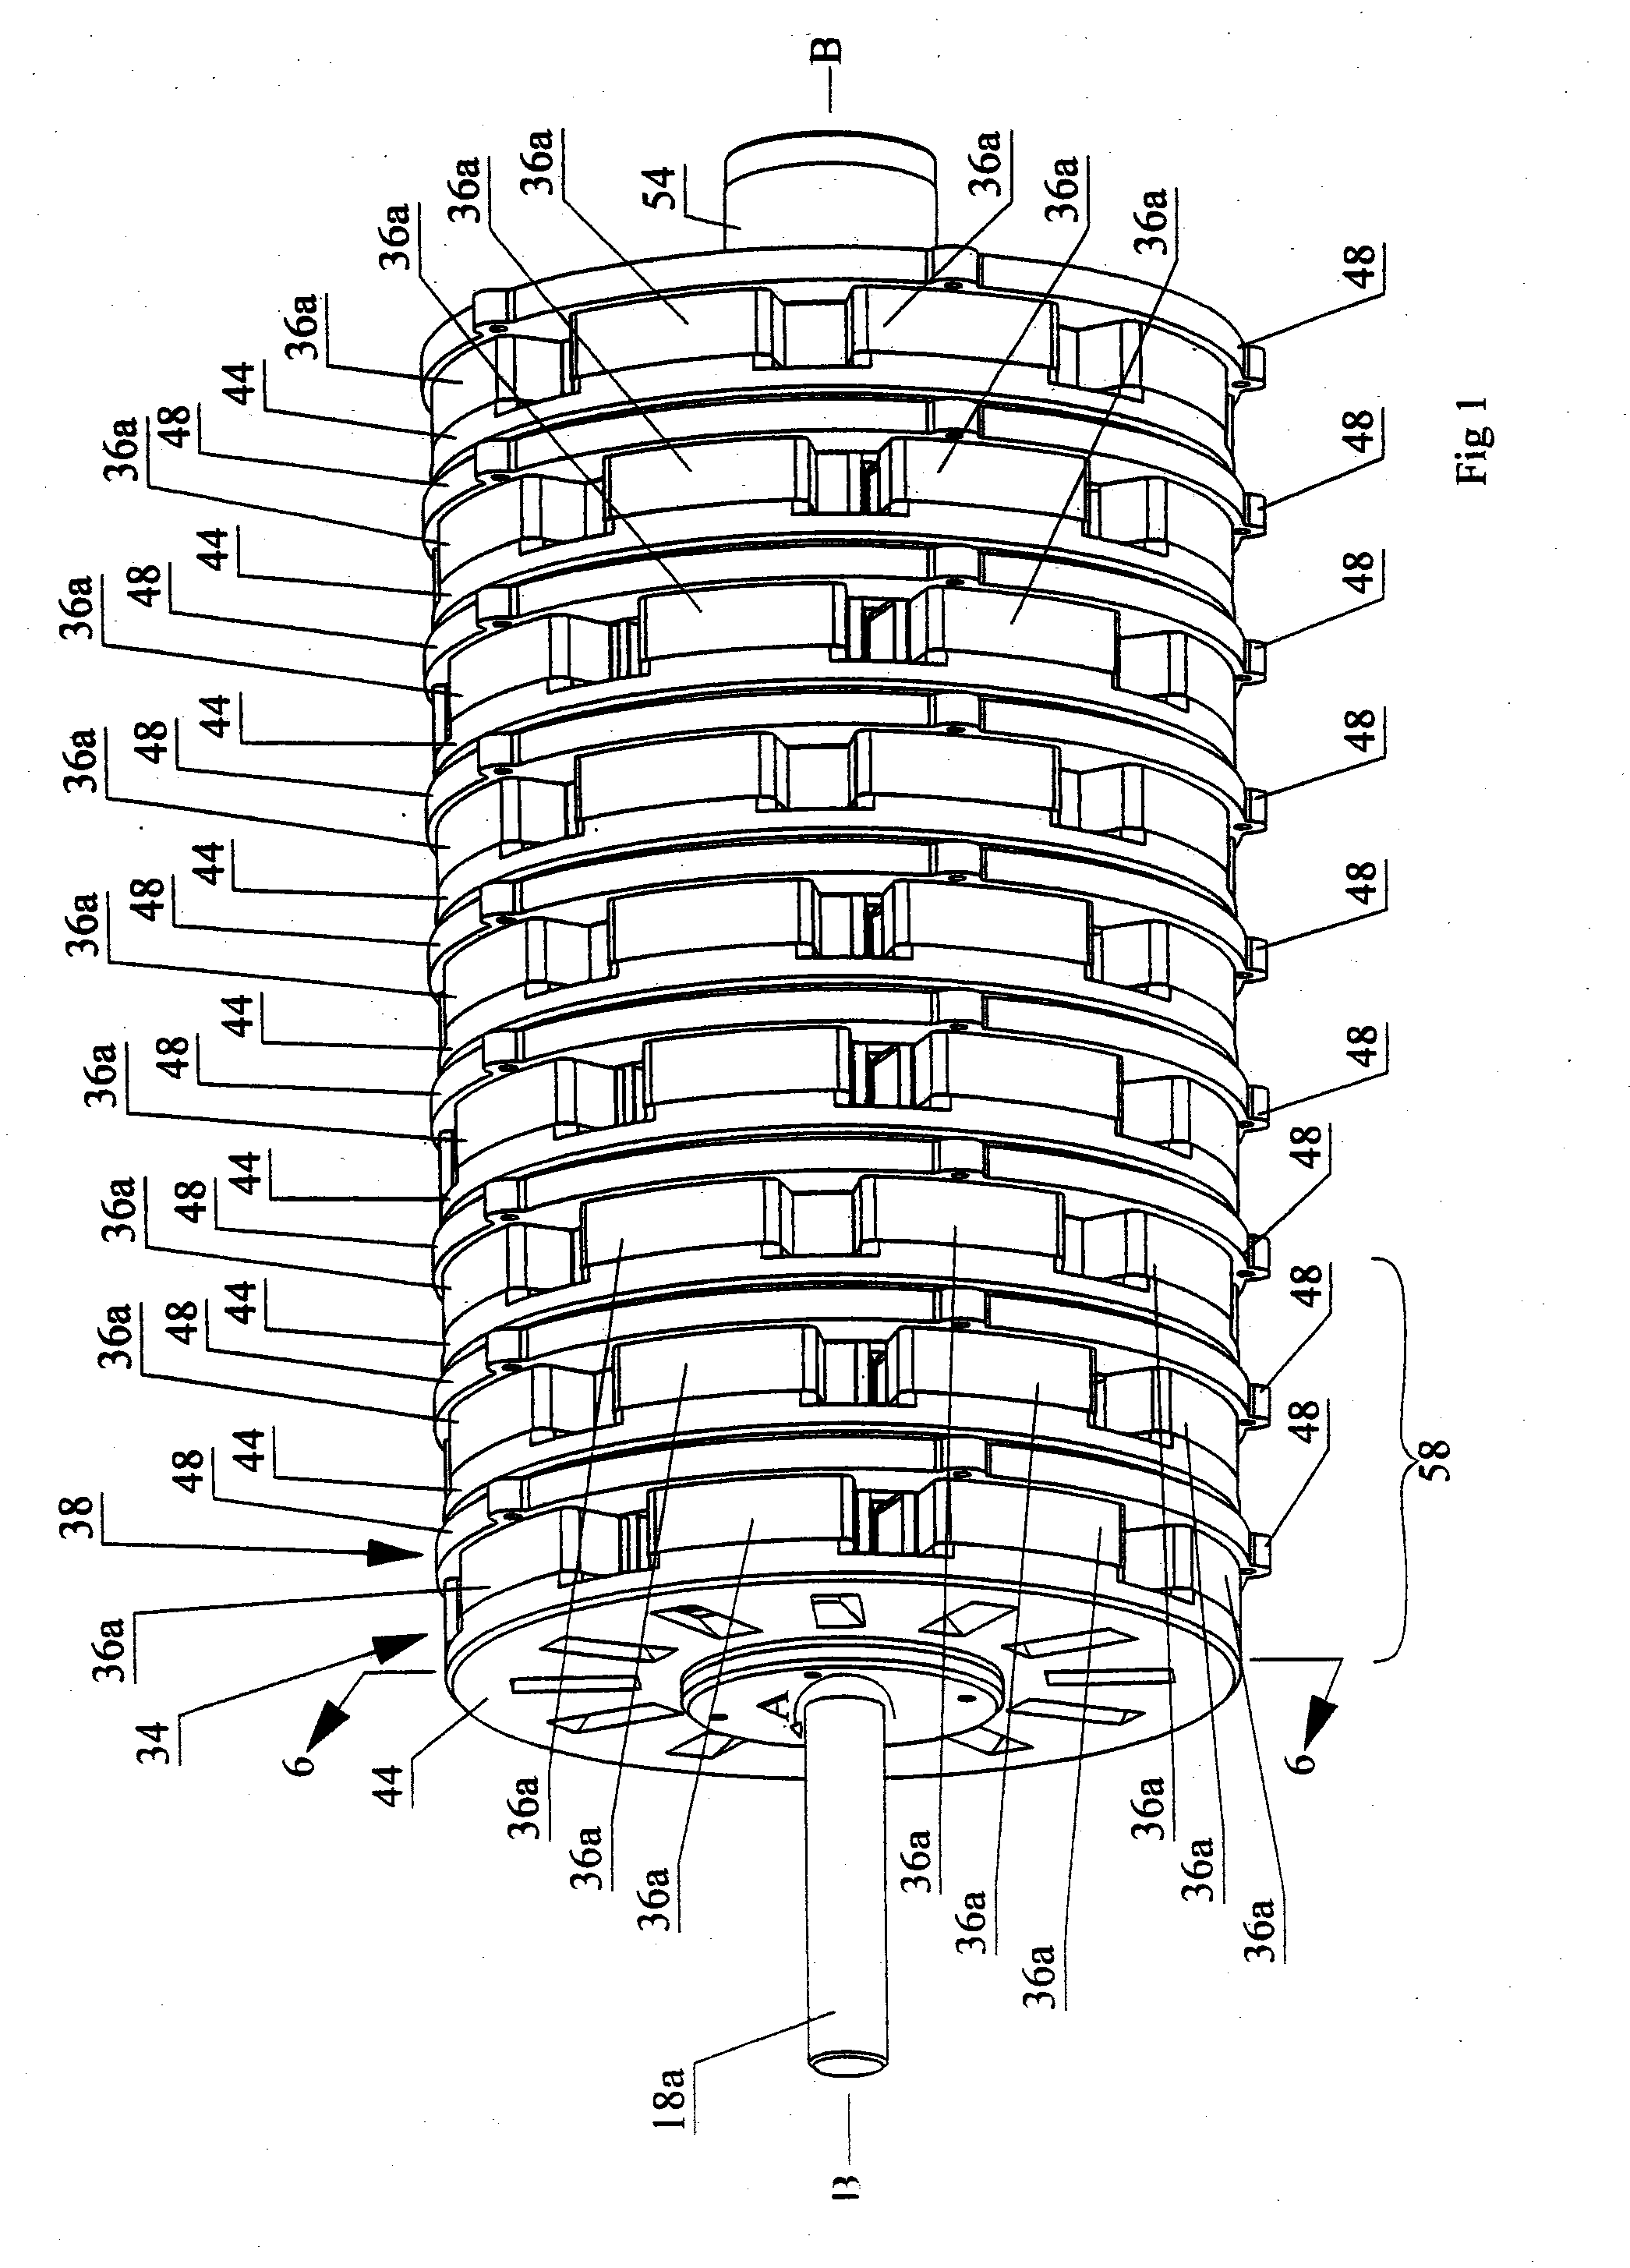 Polyphasic multi-coil generator